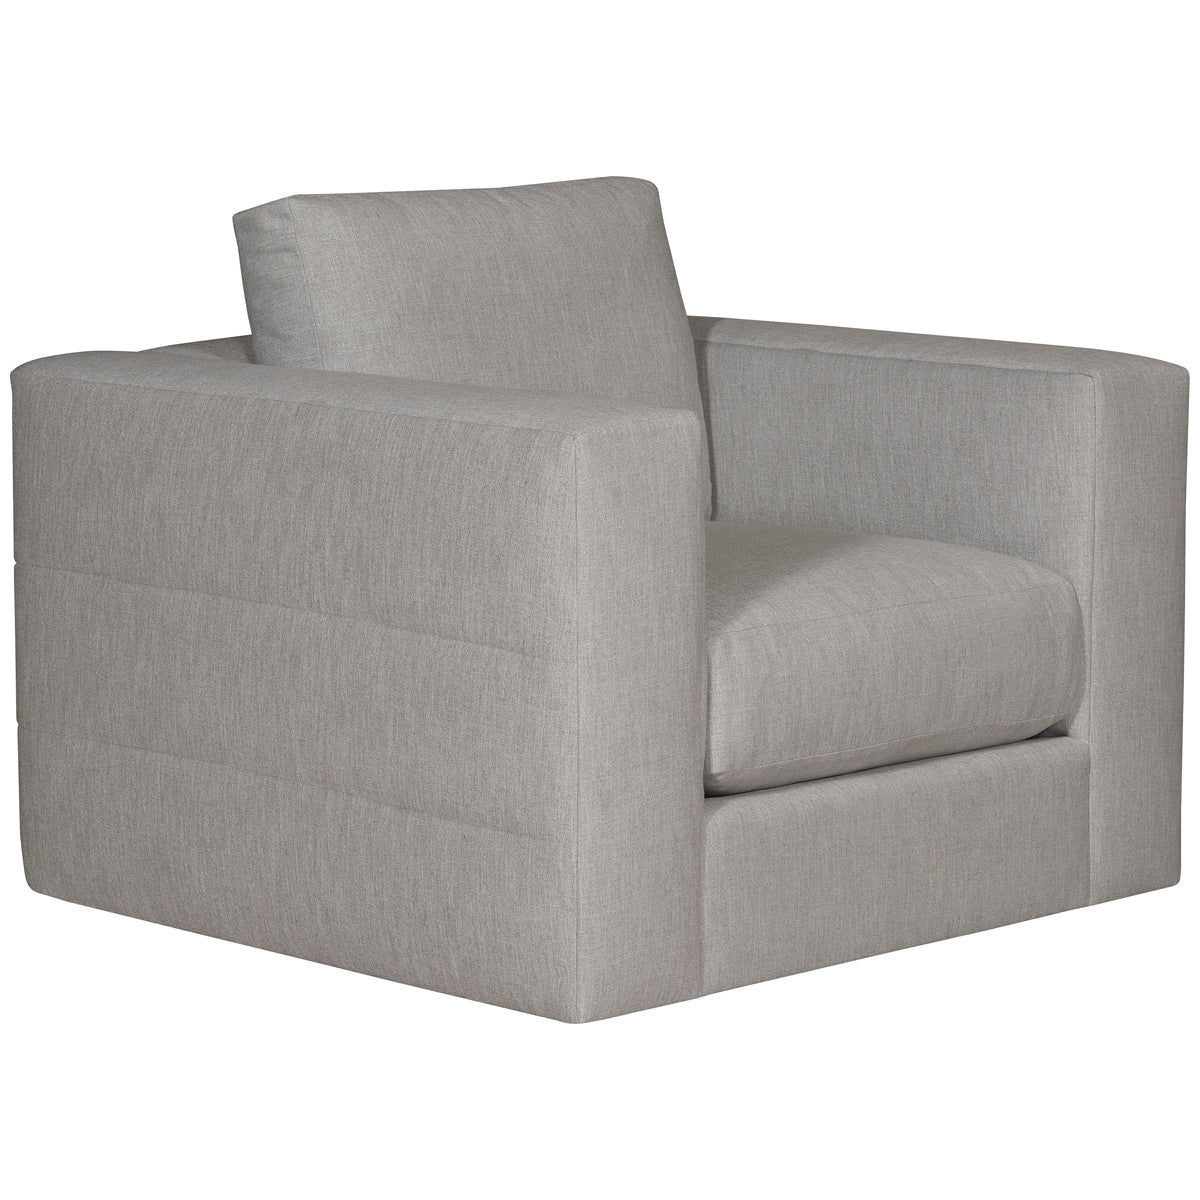 Vanguard Furniture Leone Swivel Chair - Identify Dove